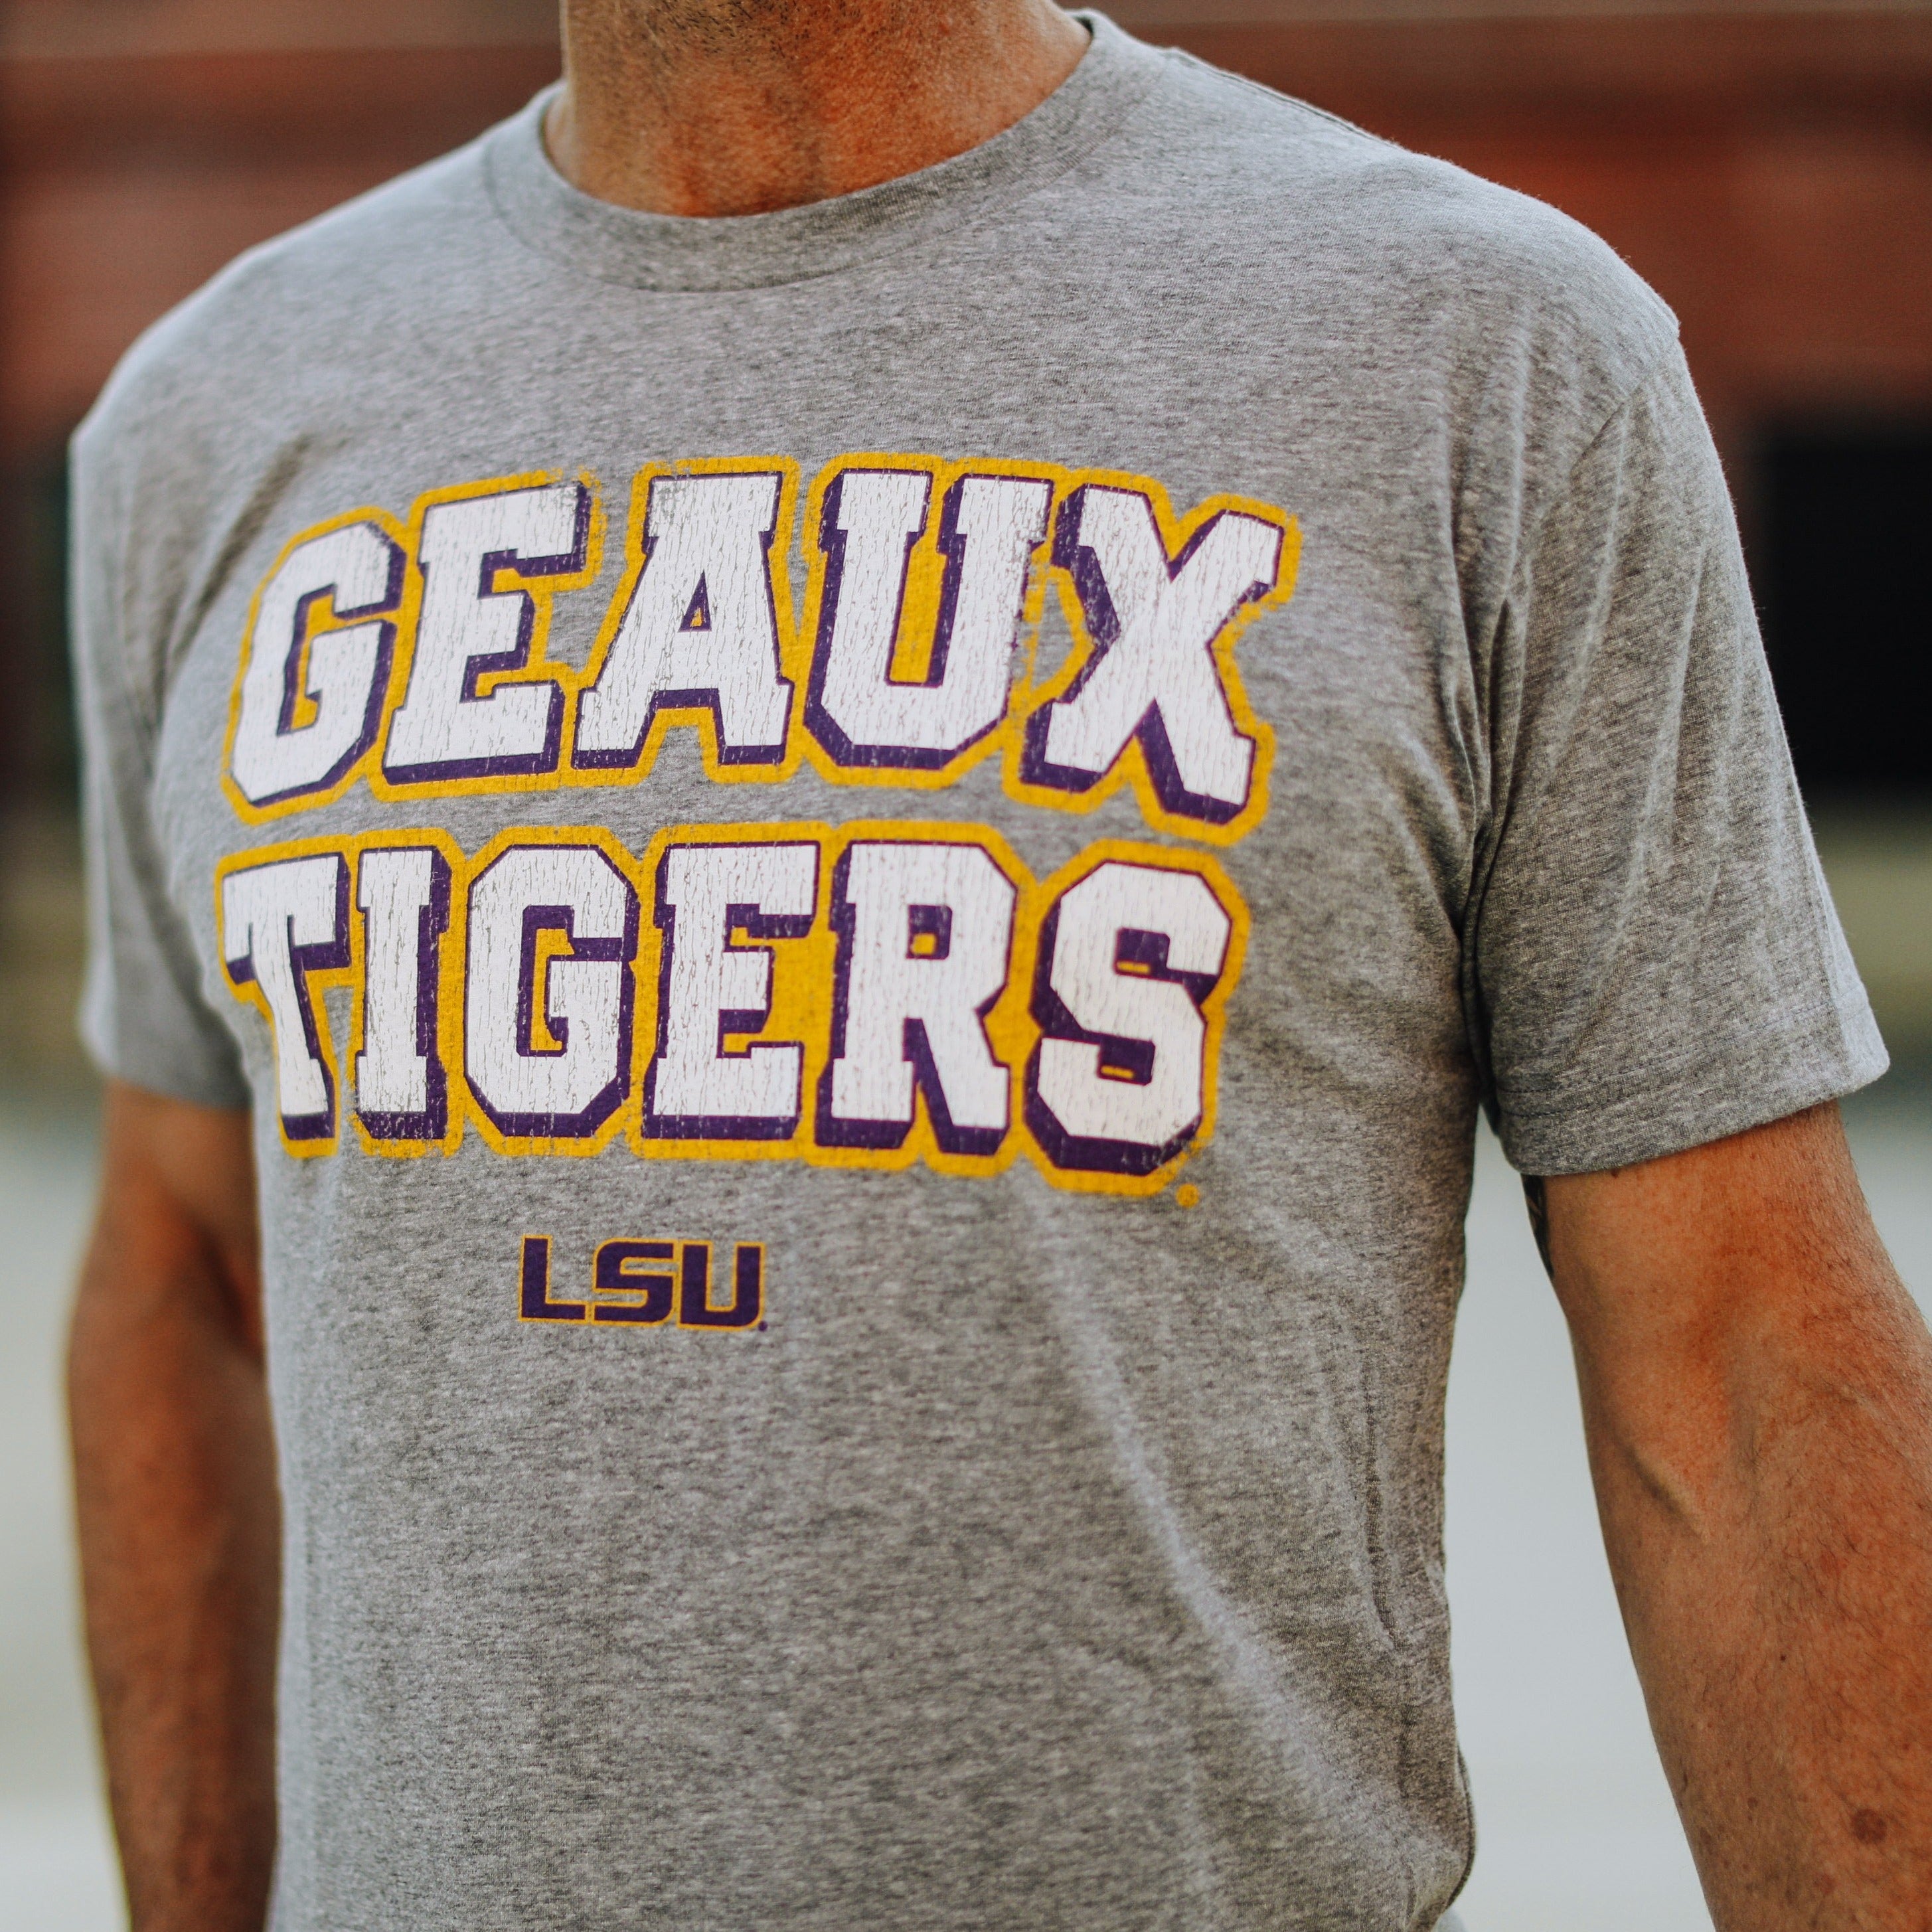 Louisiana State University geauxmaha Shirt, Unisex Clothing Shirt for Men Women, Graphic Design, Unisex Shirt Grey S Sweatshirt | ThiMax